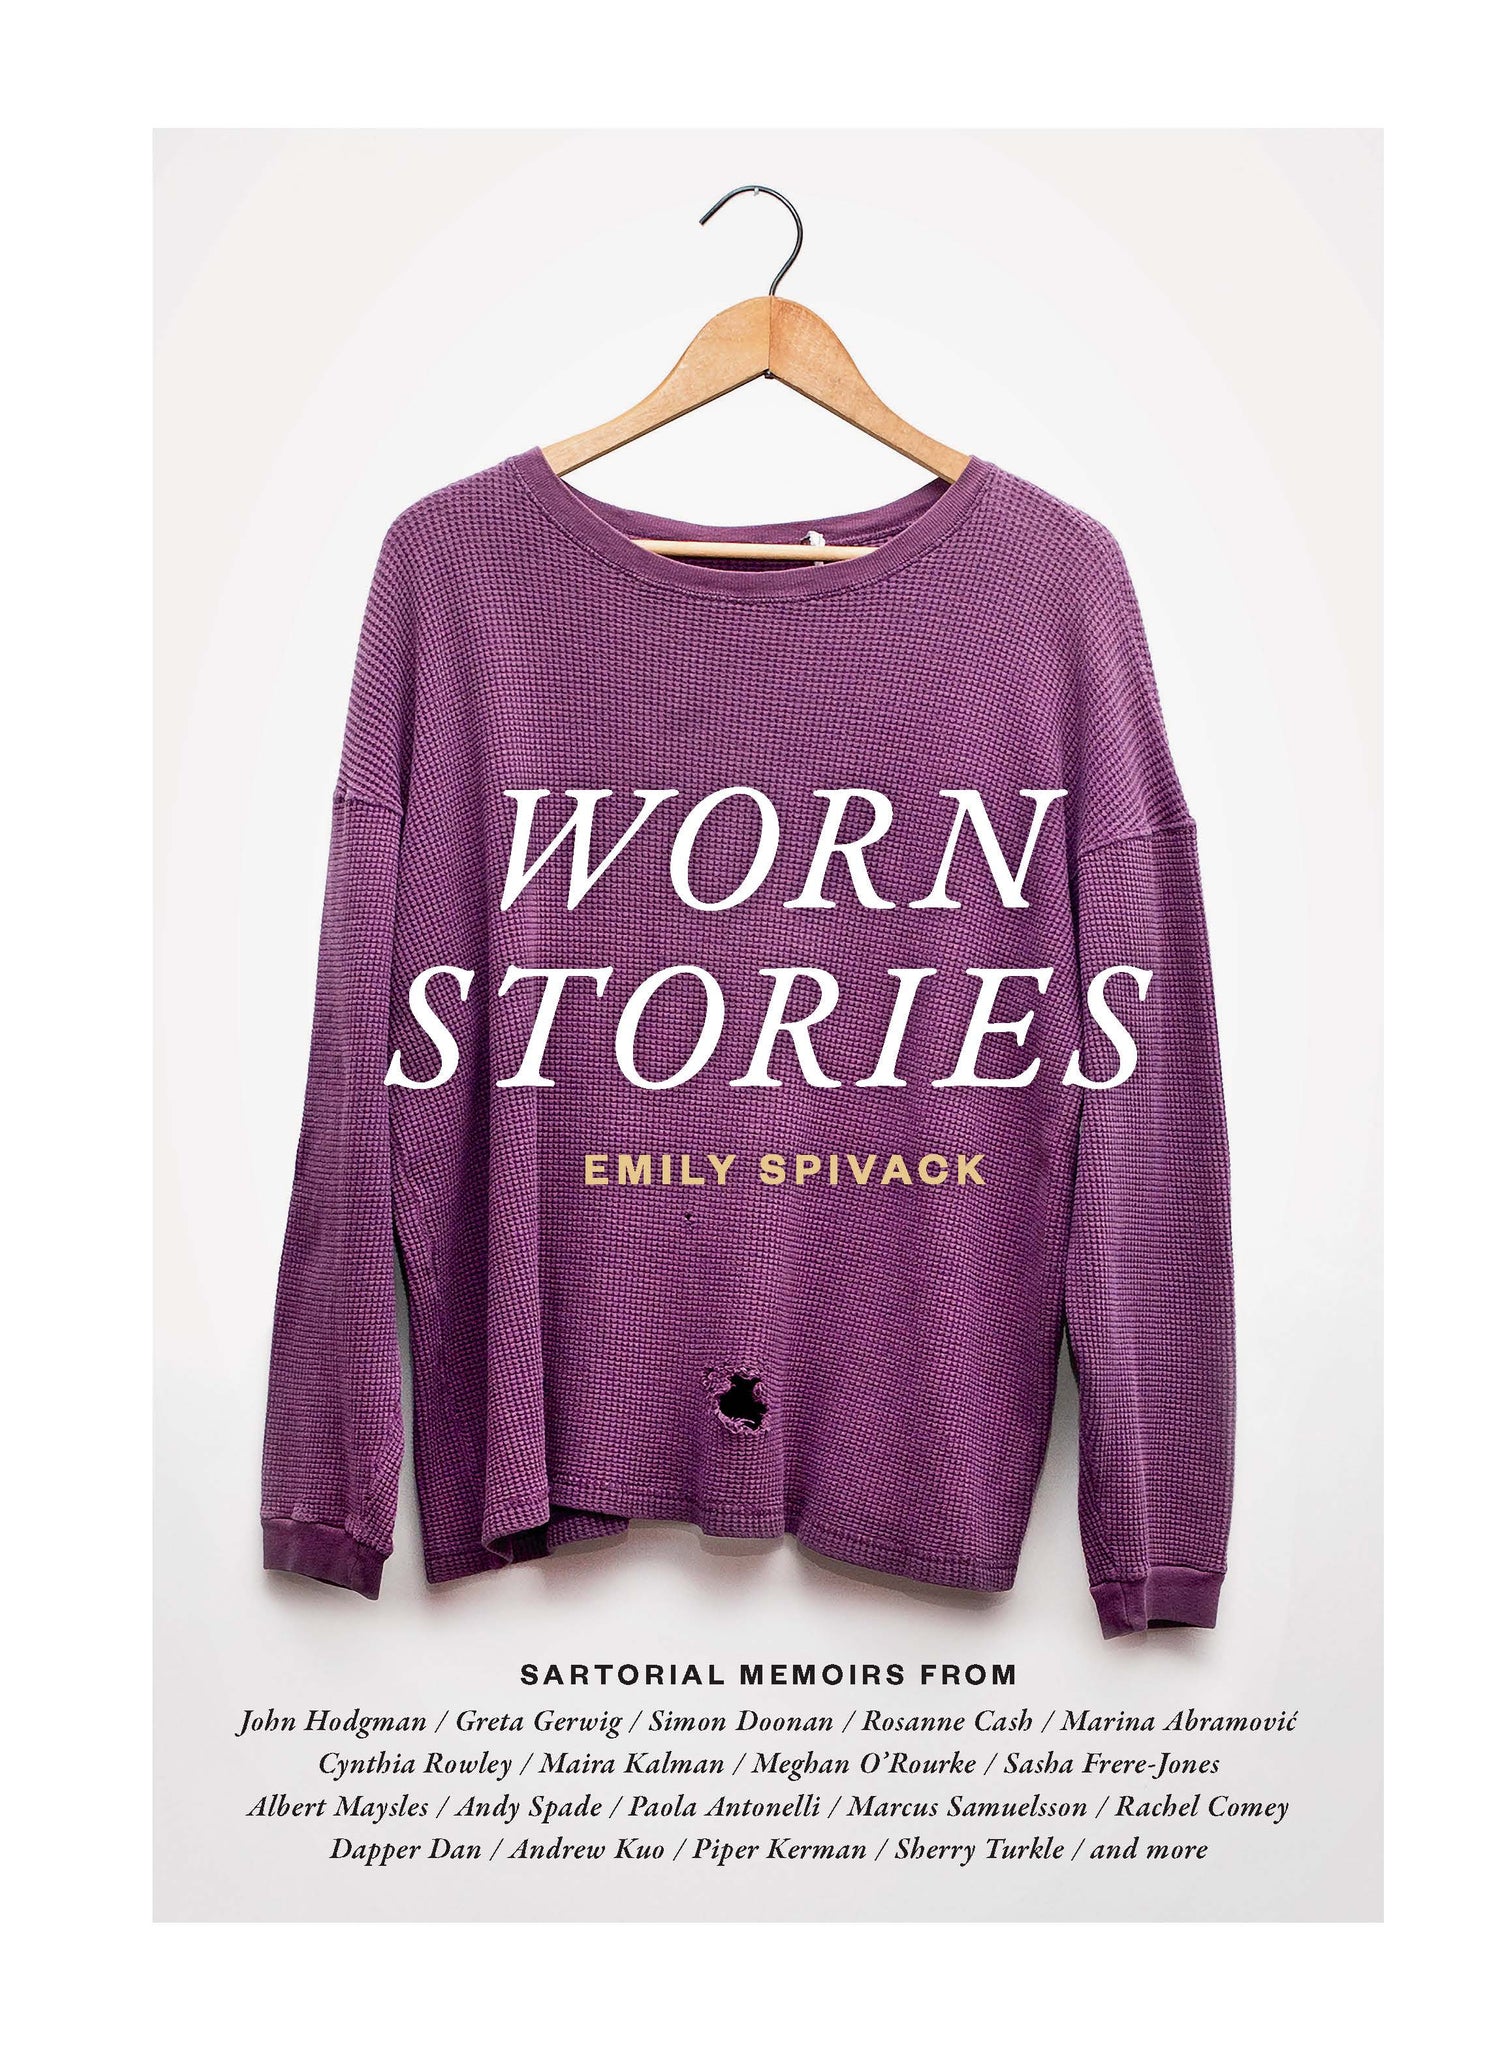 Worn Stories NEW PB EDITION - Netflix series premiering April 1 cover